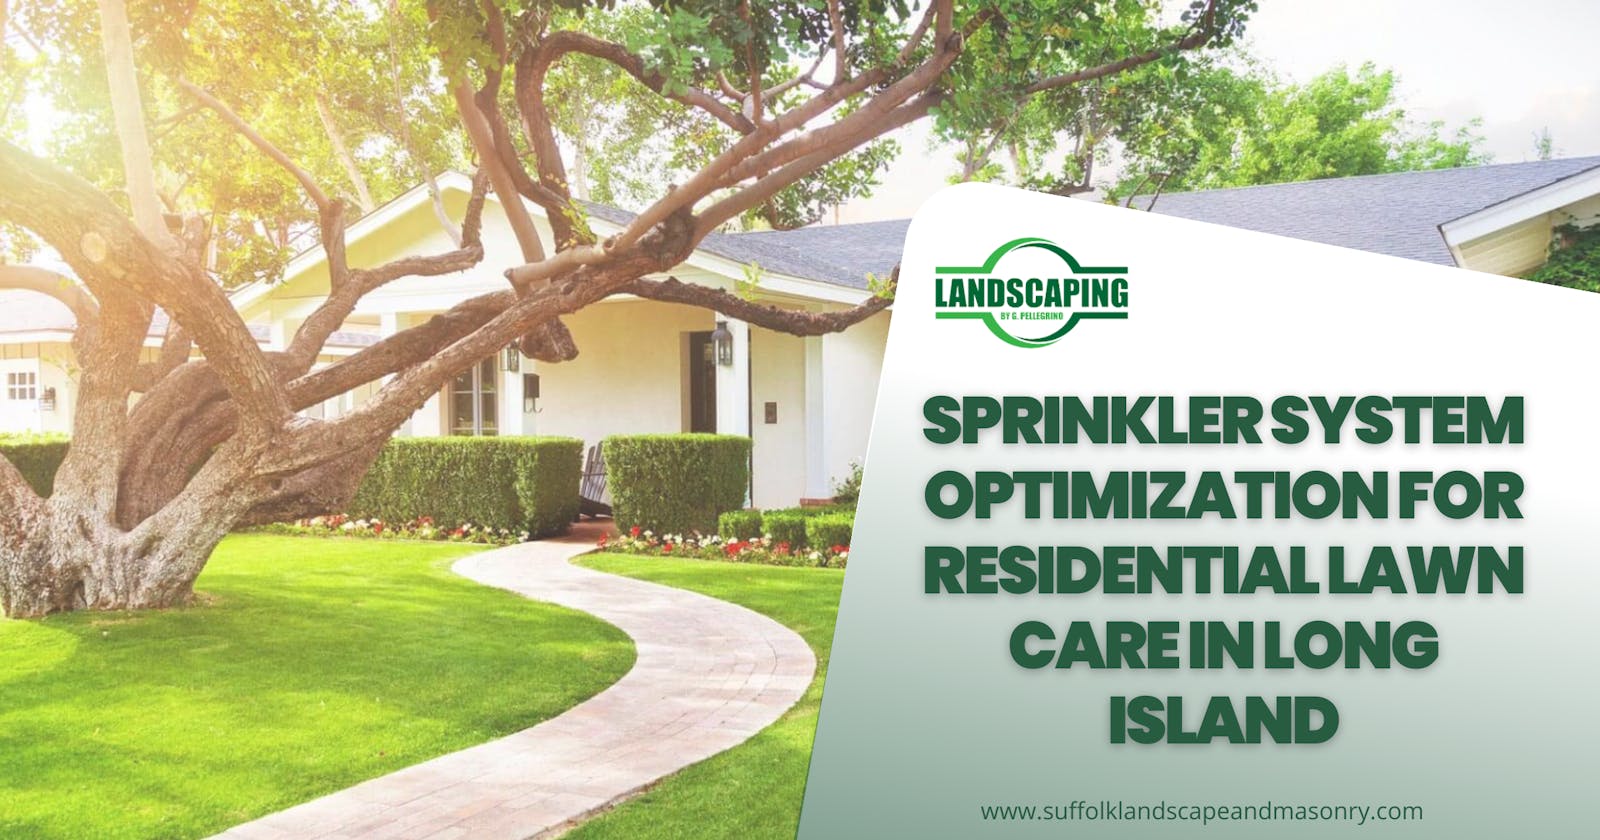 Sprinkler System Optimization for Residential Lawn Care in Long Island